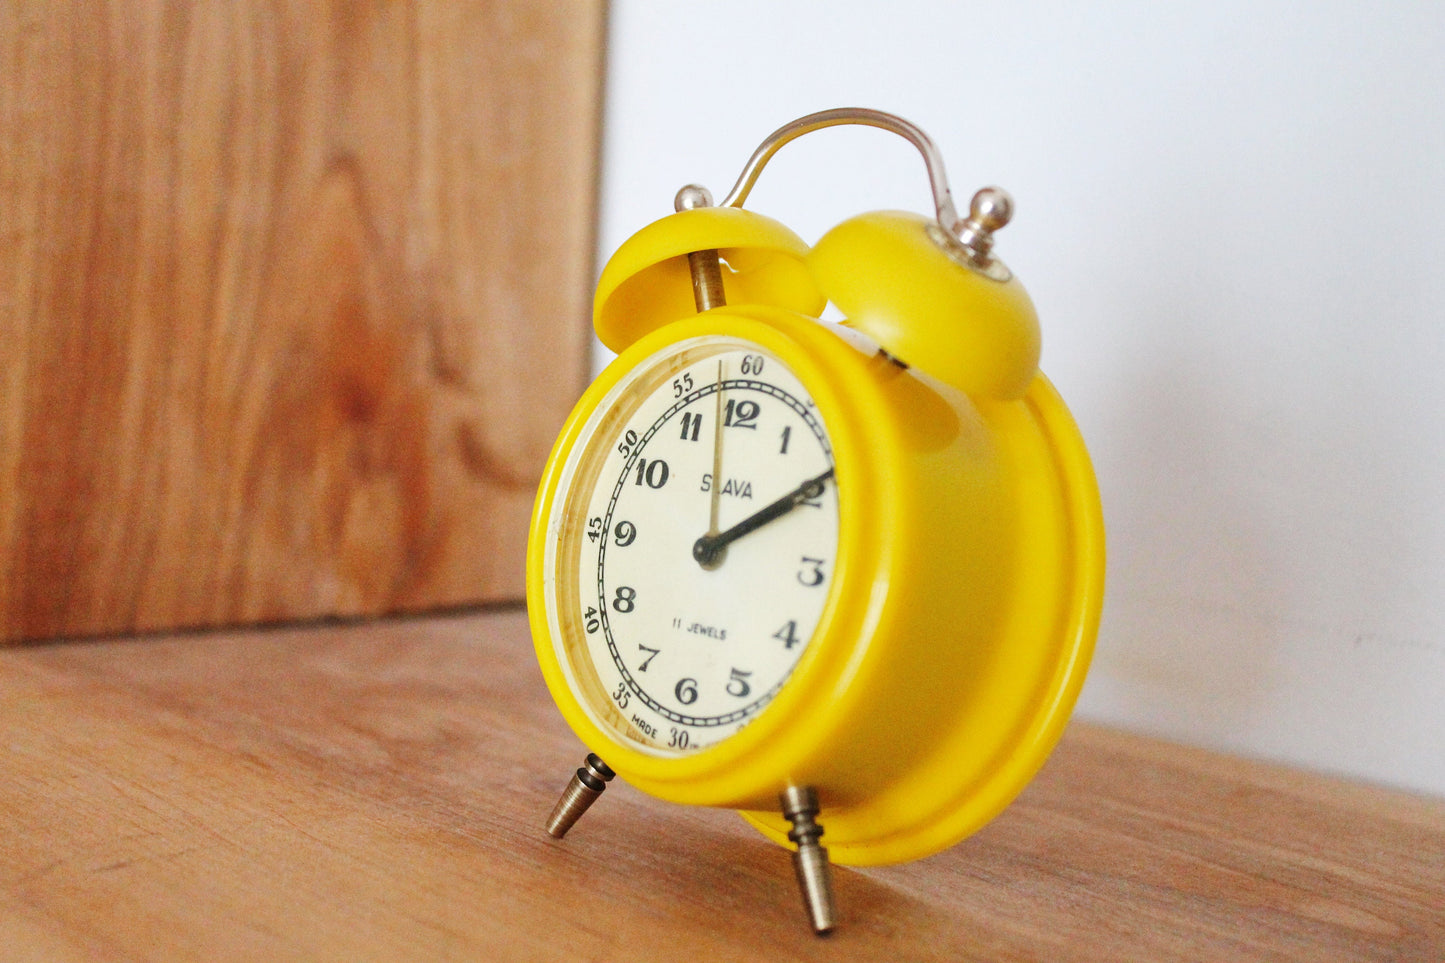 Mechanical yellow alarm clock Slava - Shabby chick vintage clock from USSR era - 1960s-1970s - Soviet alarm clock